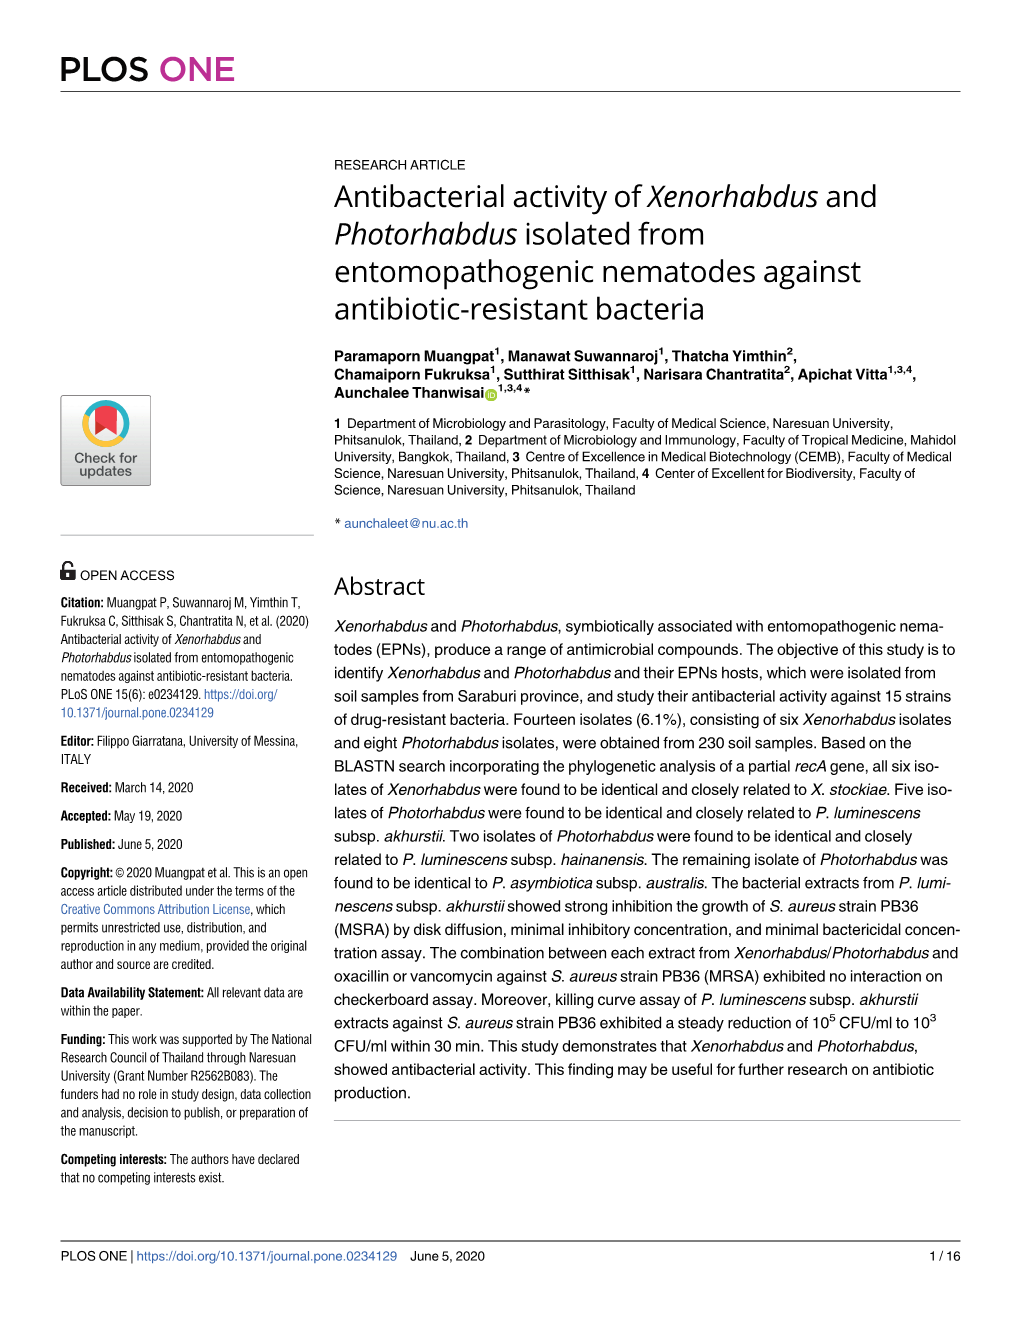 Antibacterial Activity of Xenorhabdus and Photorhabdus Isolated from Entomopathogenic Nematodes Against Antibiotic-Resistant Bacteria